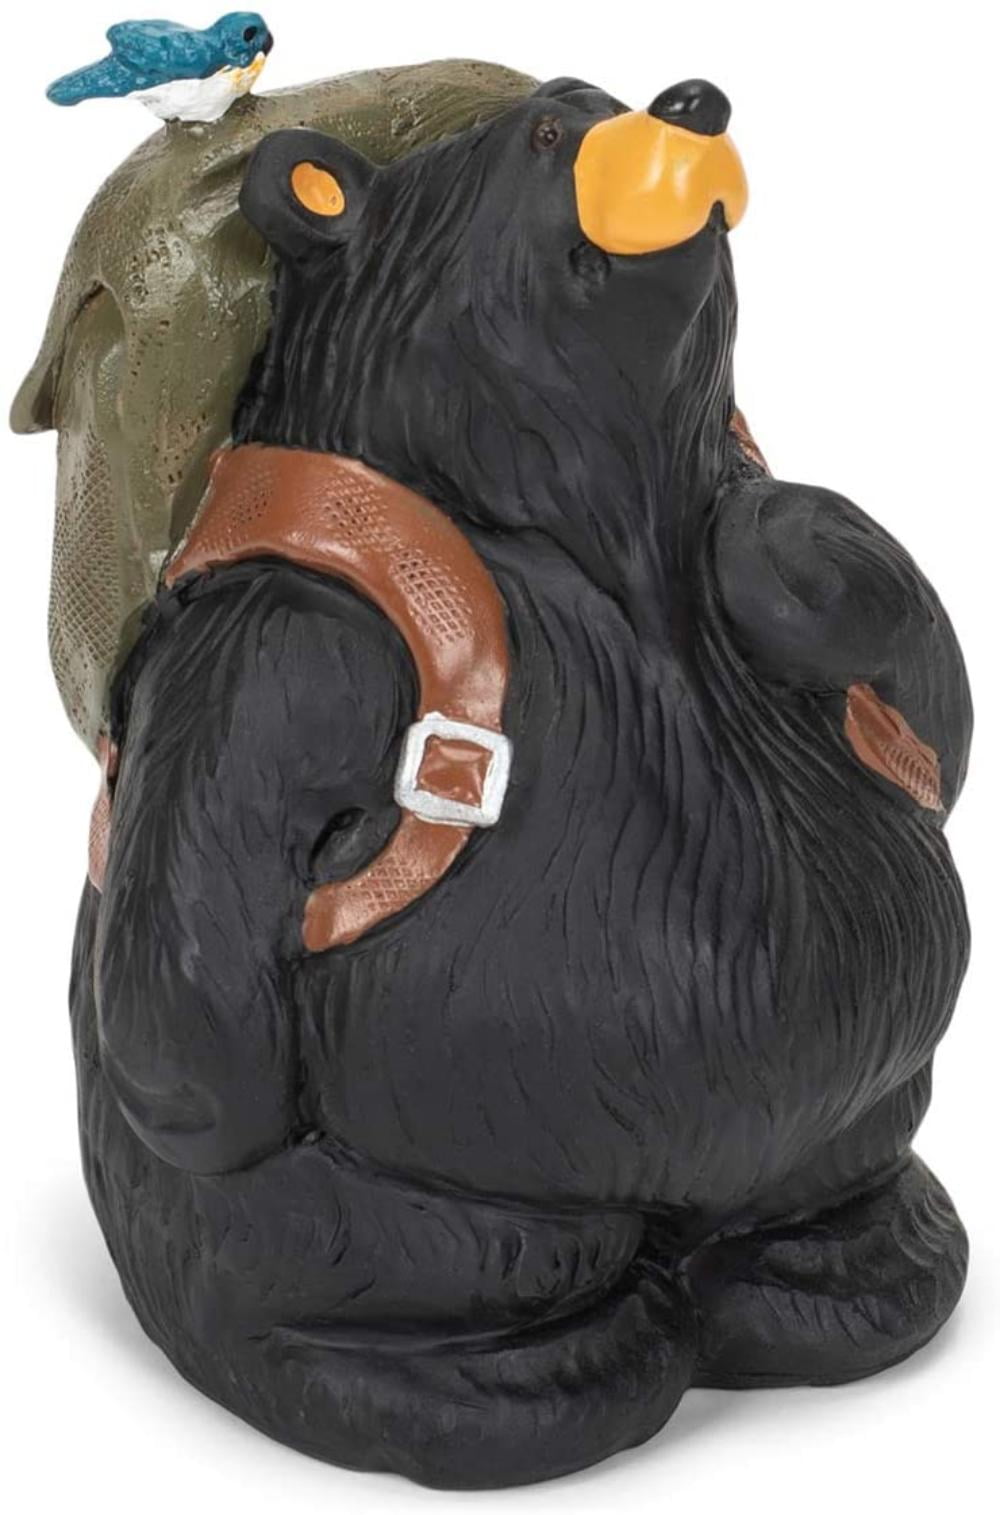 DEMDACO Uncorked Black Bear 5 x 6 Hand-cast Resin Figurine Sculpture 